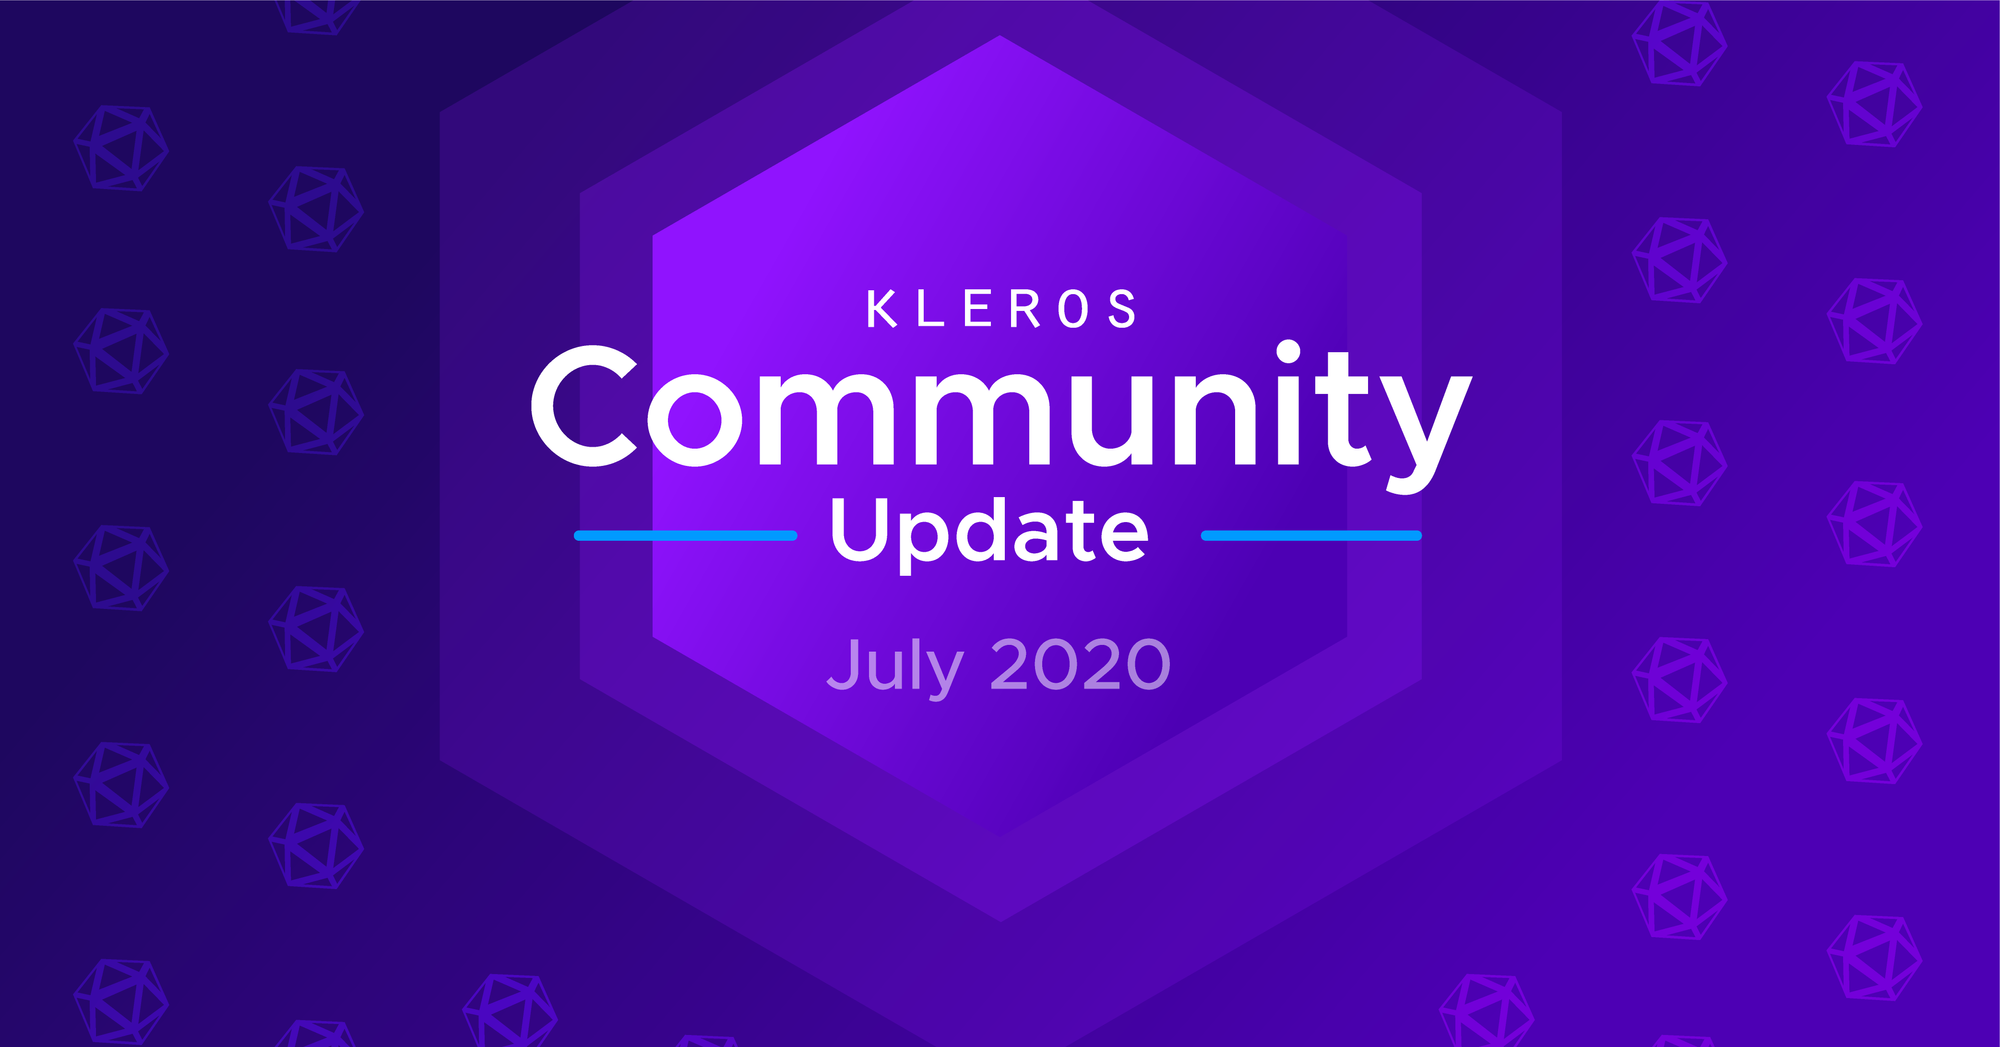 Kleros Community Update - July 2020